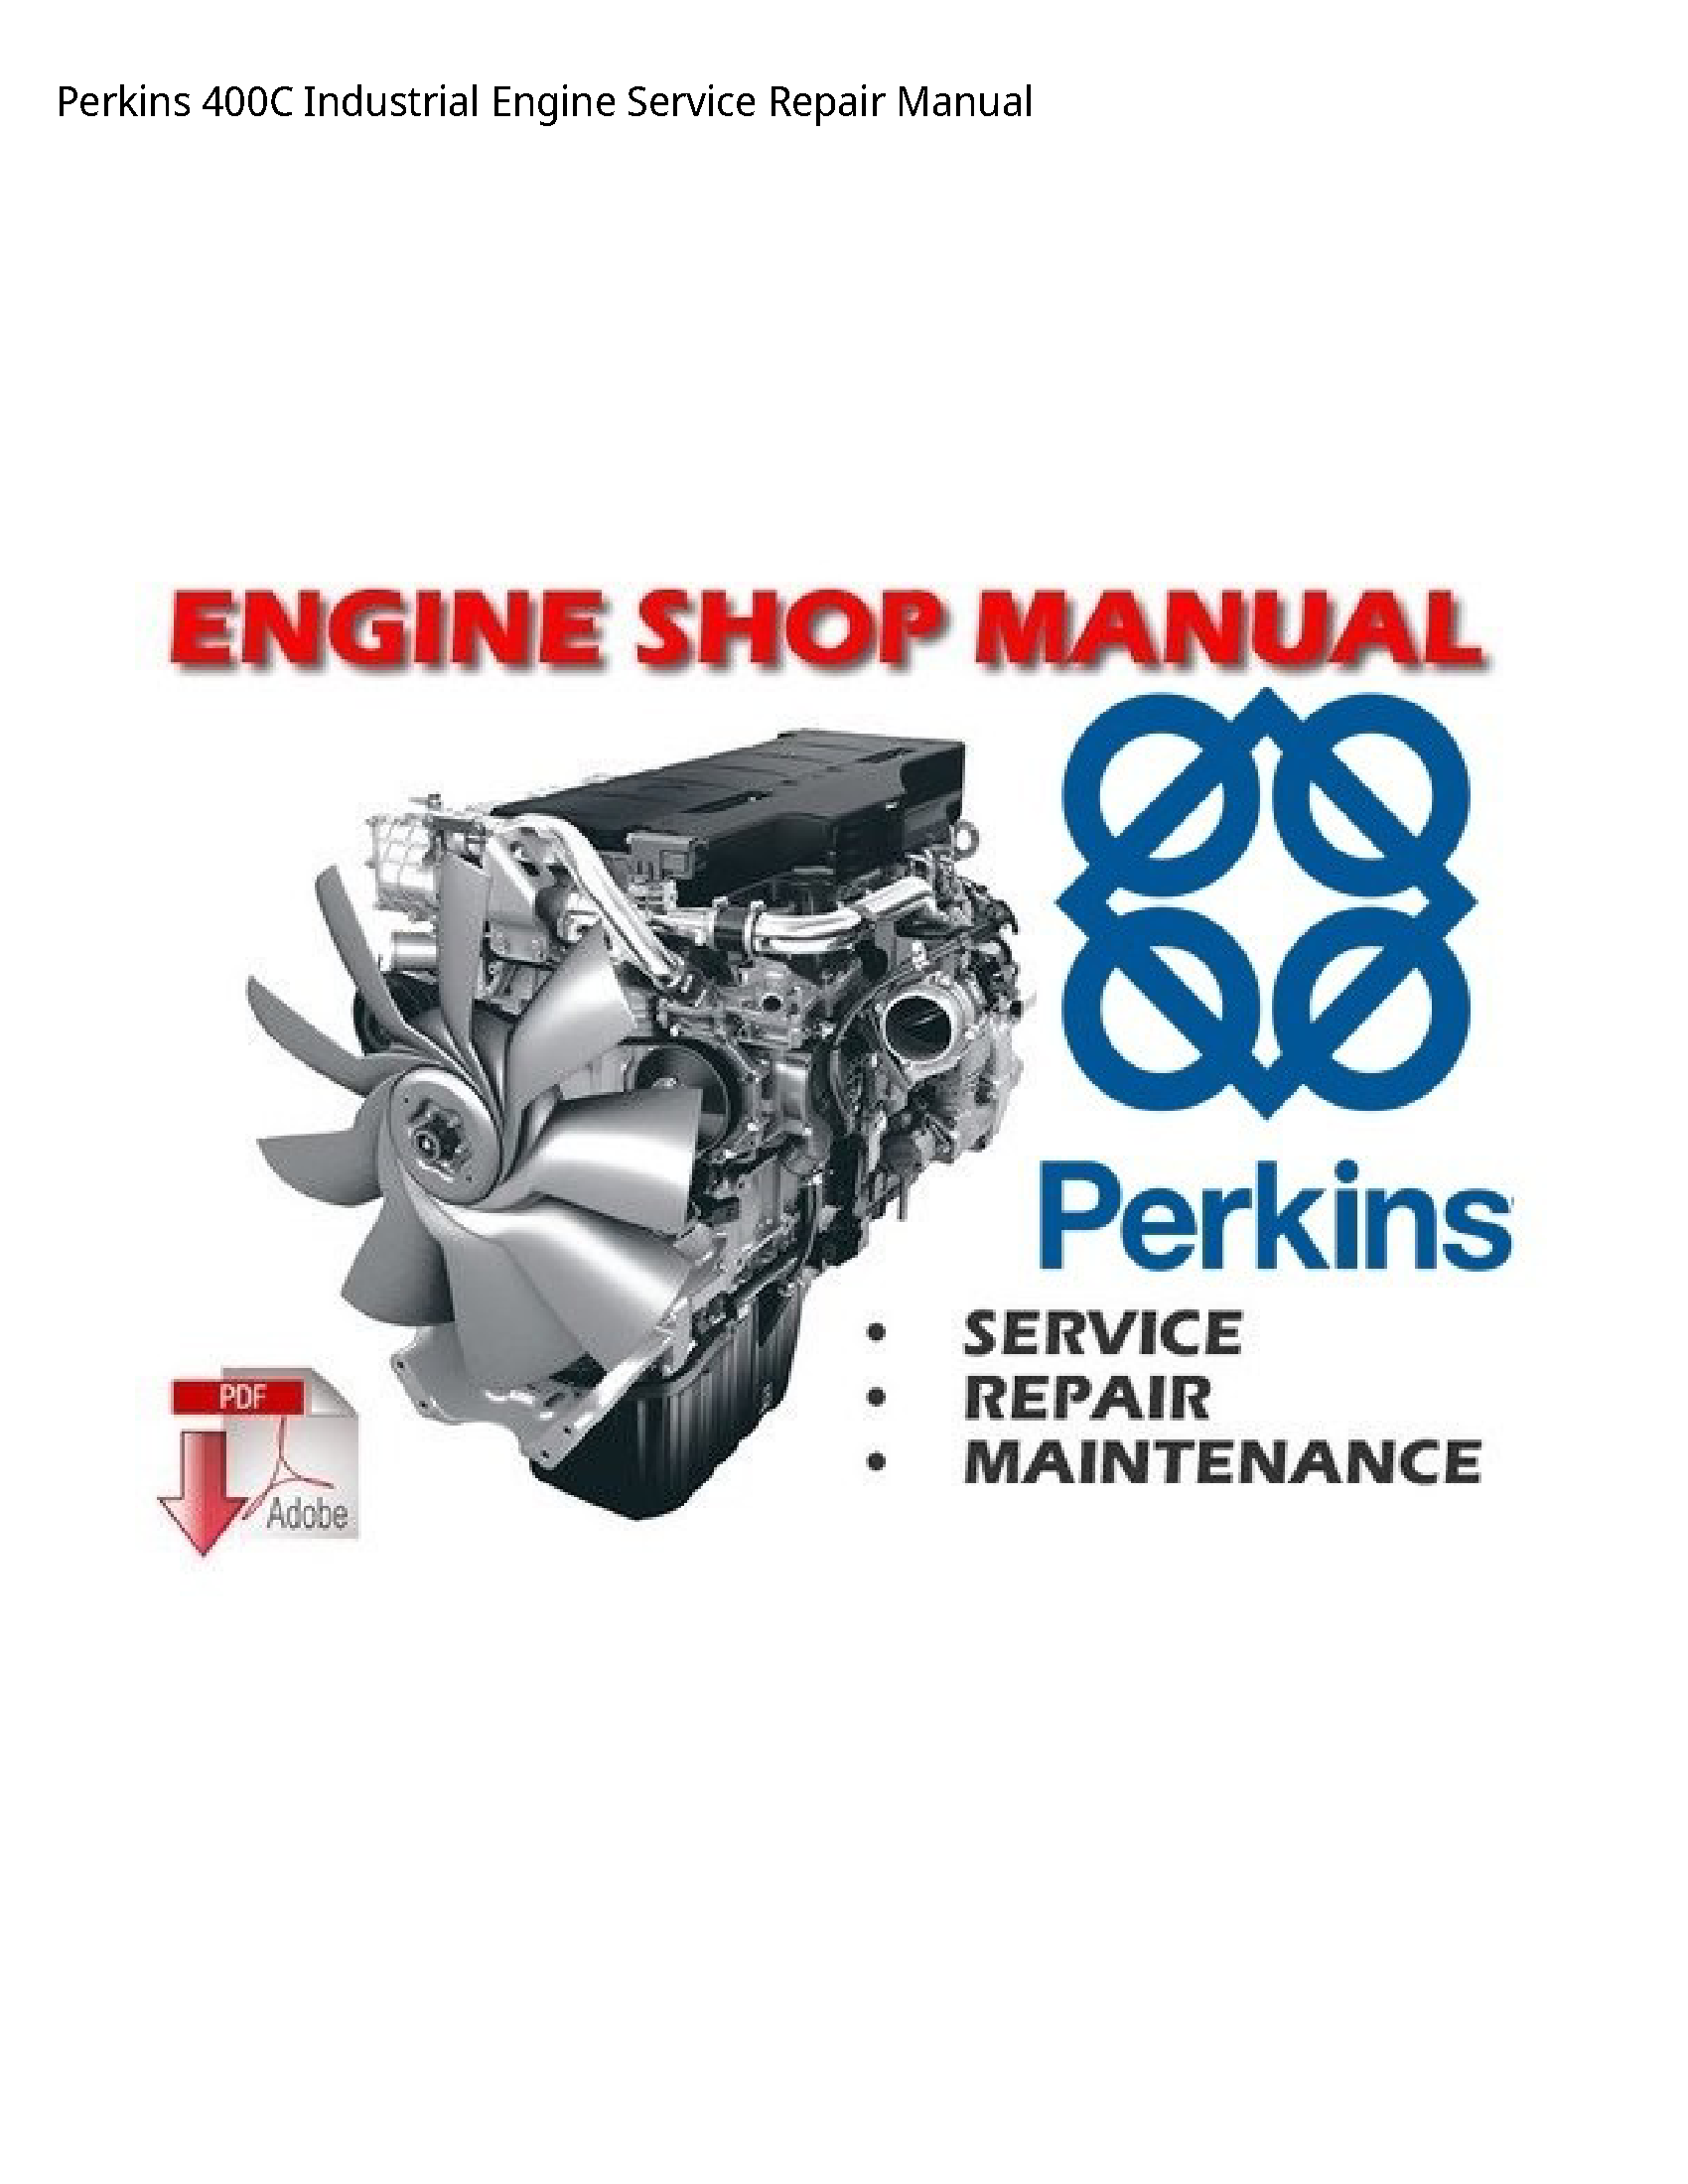 Perkins 400C Industrial Engine manual